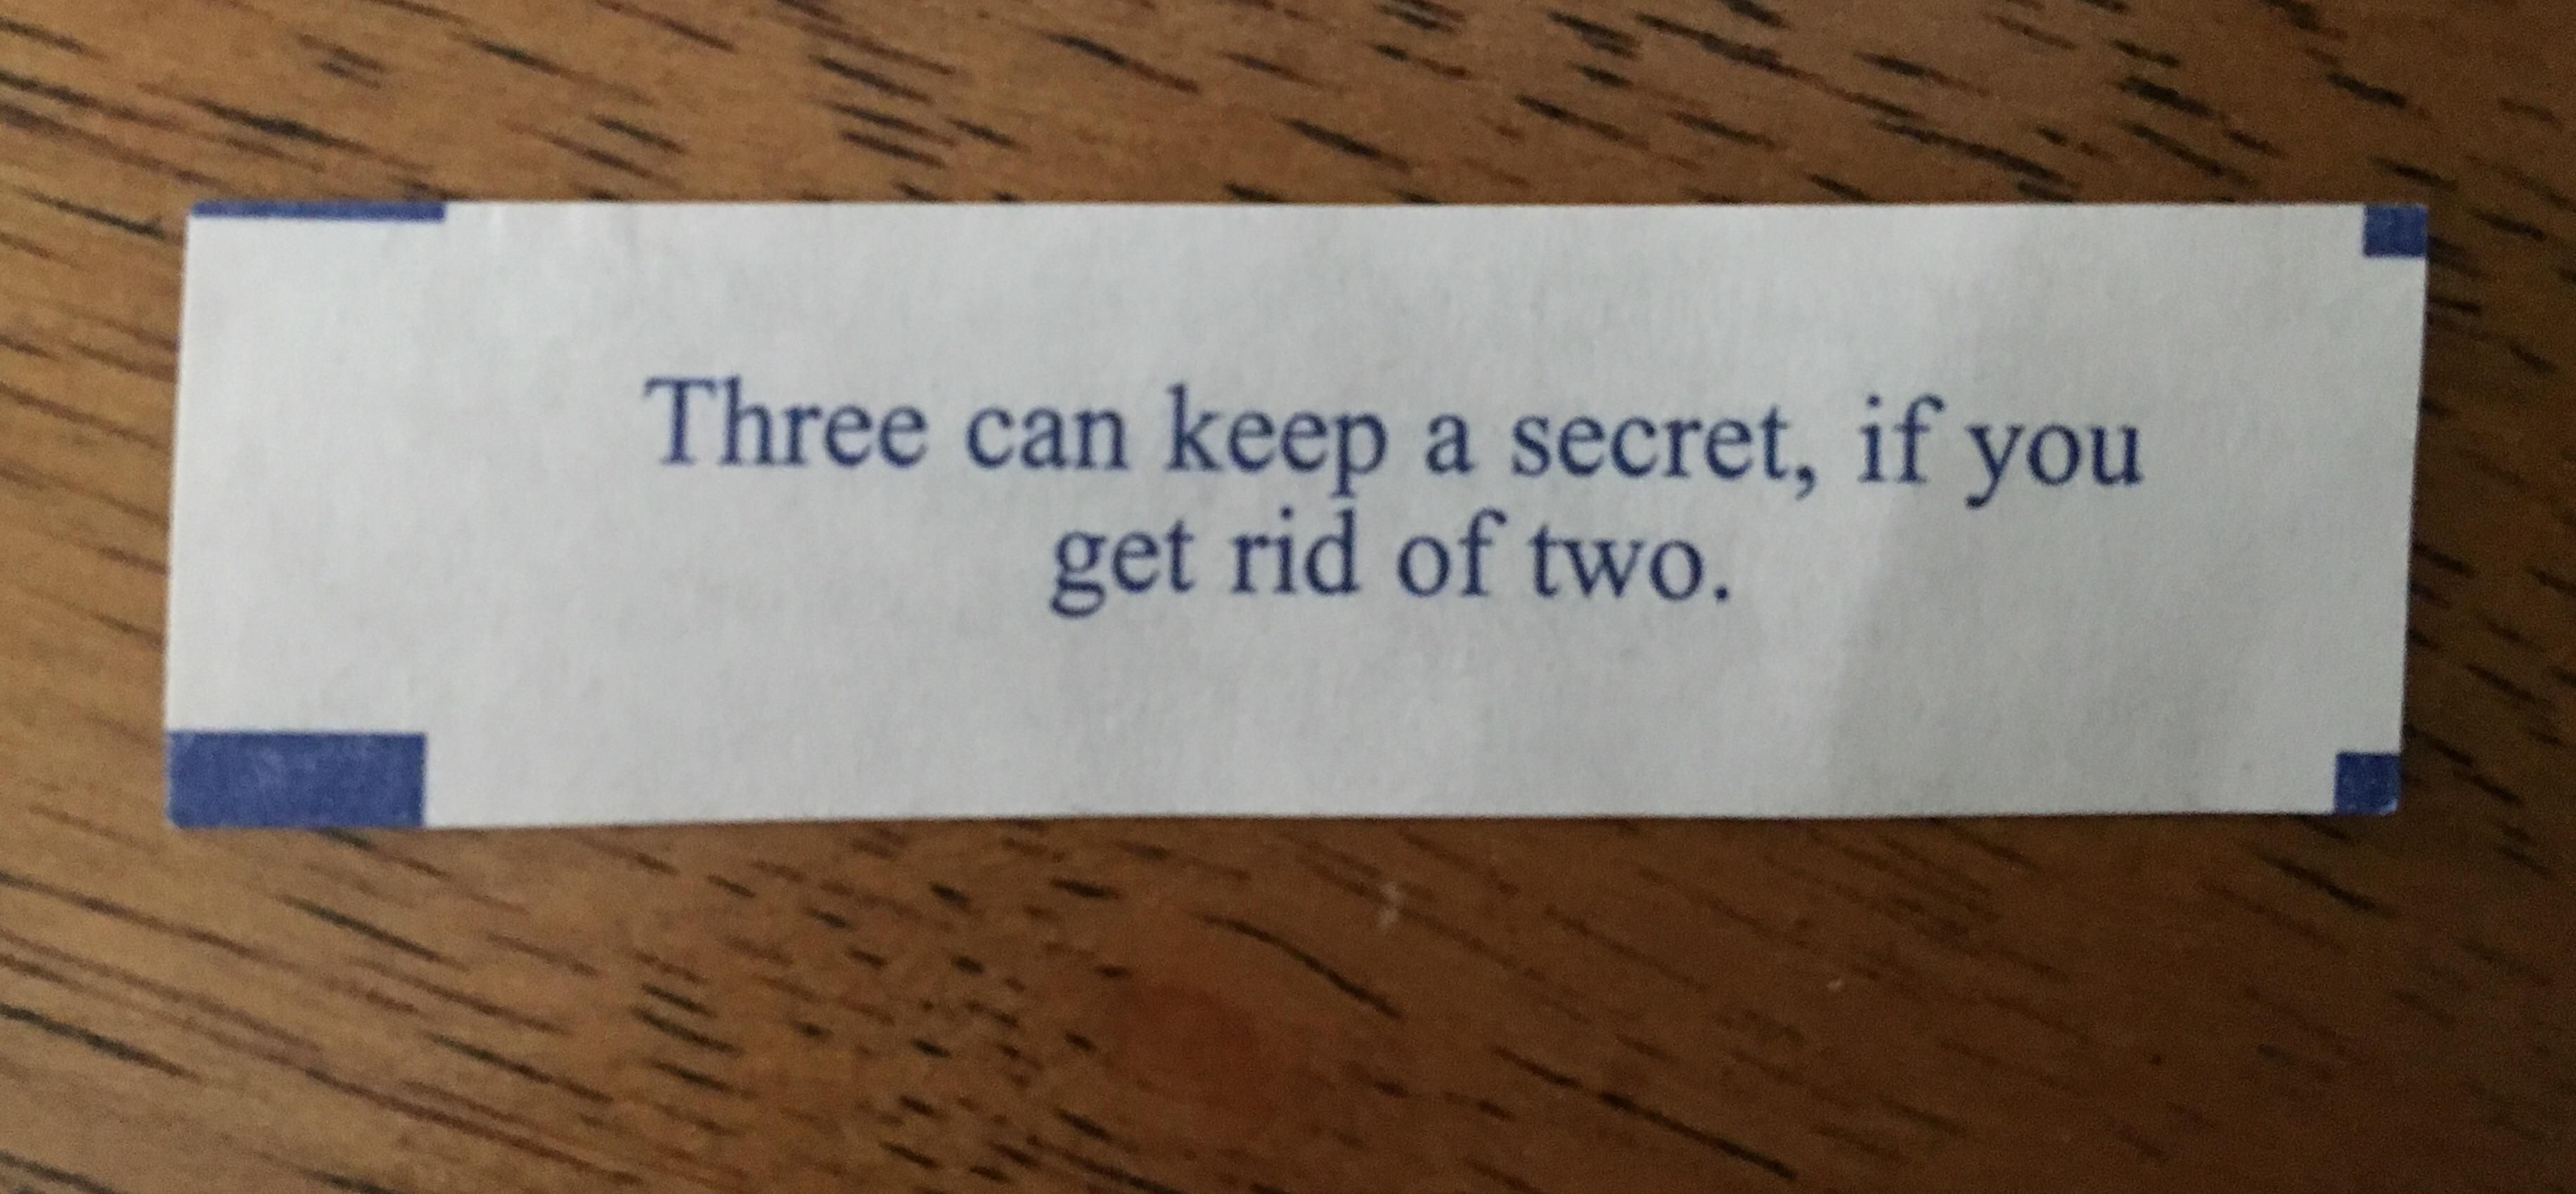 My husband’s fortune is surprisingly dark.